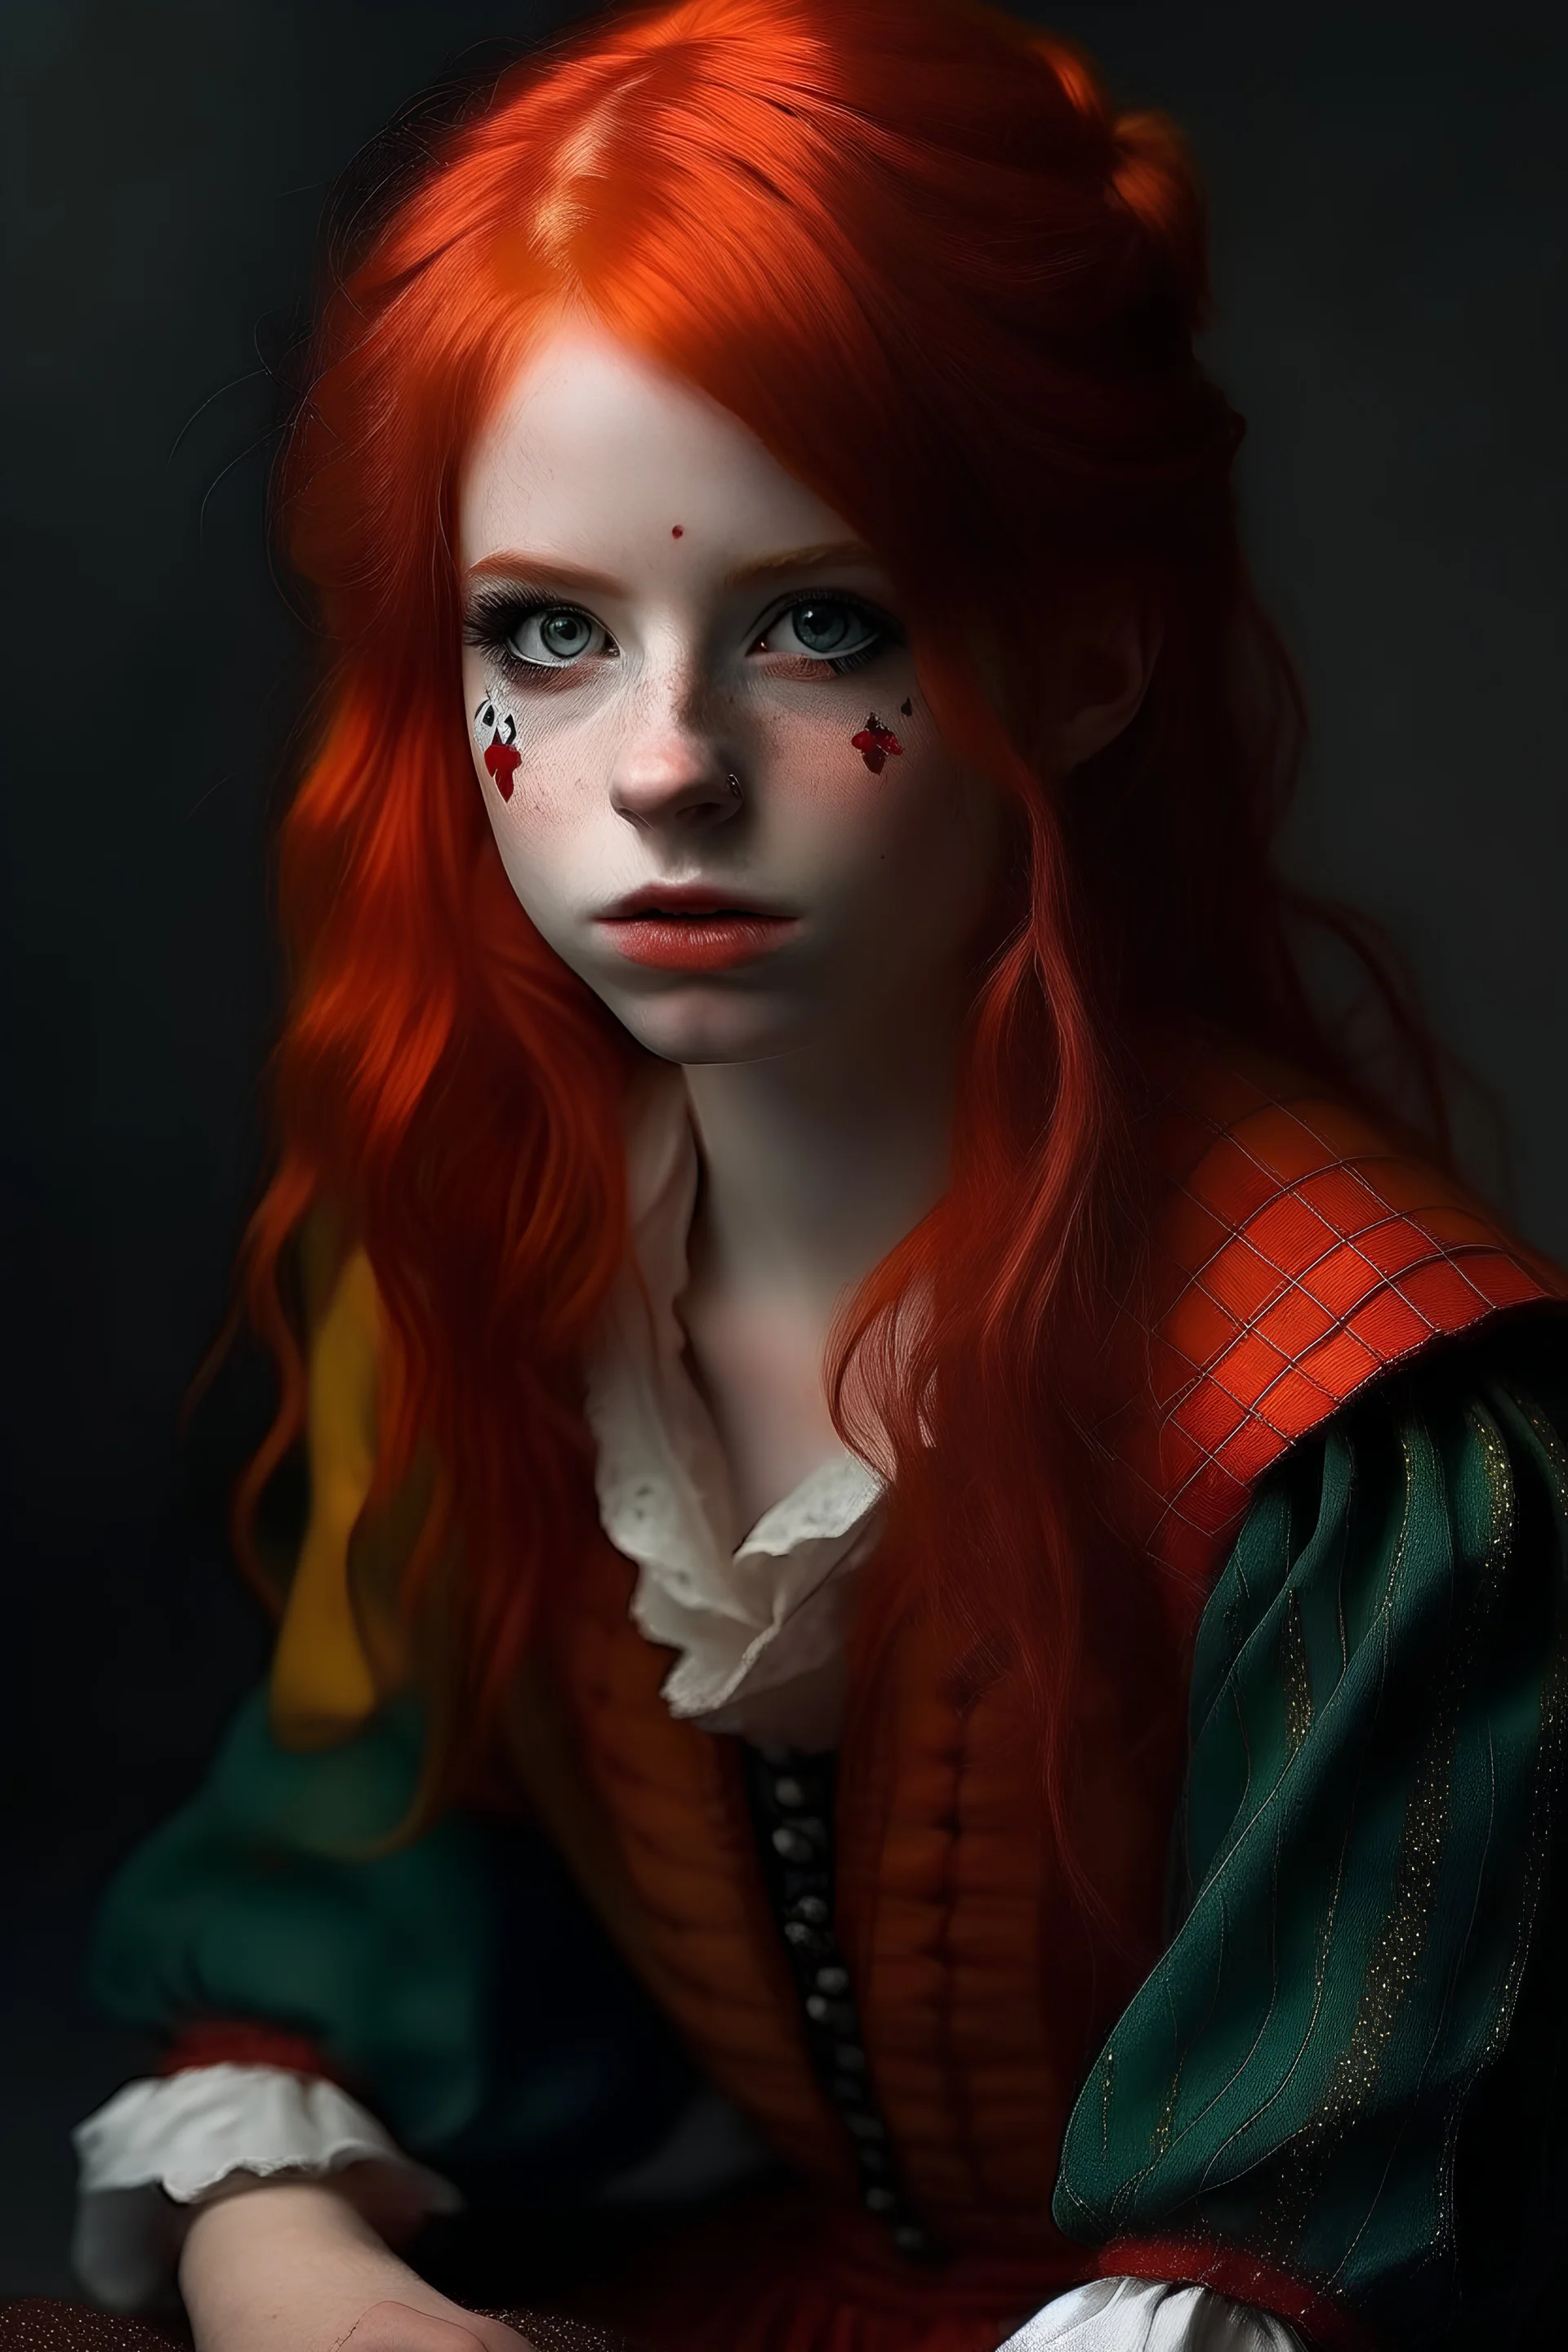 Human, 19yo girl, redhair, medieval, fantasy, clown suit